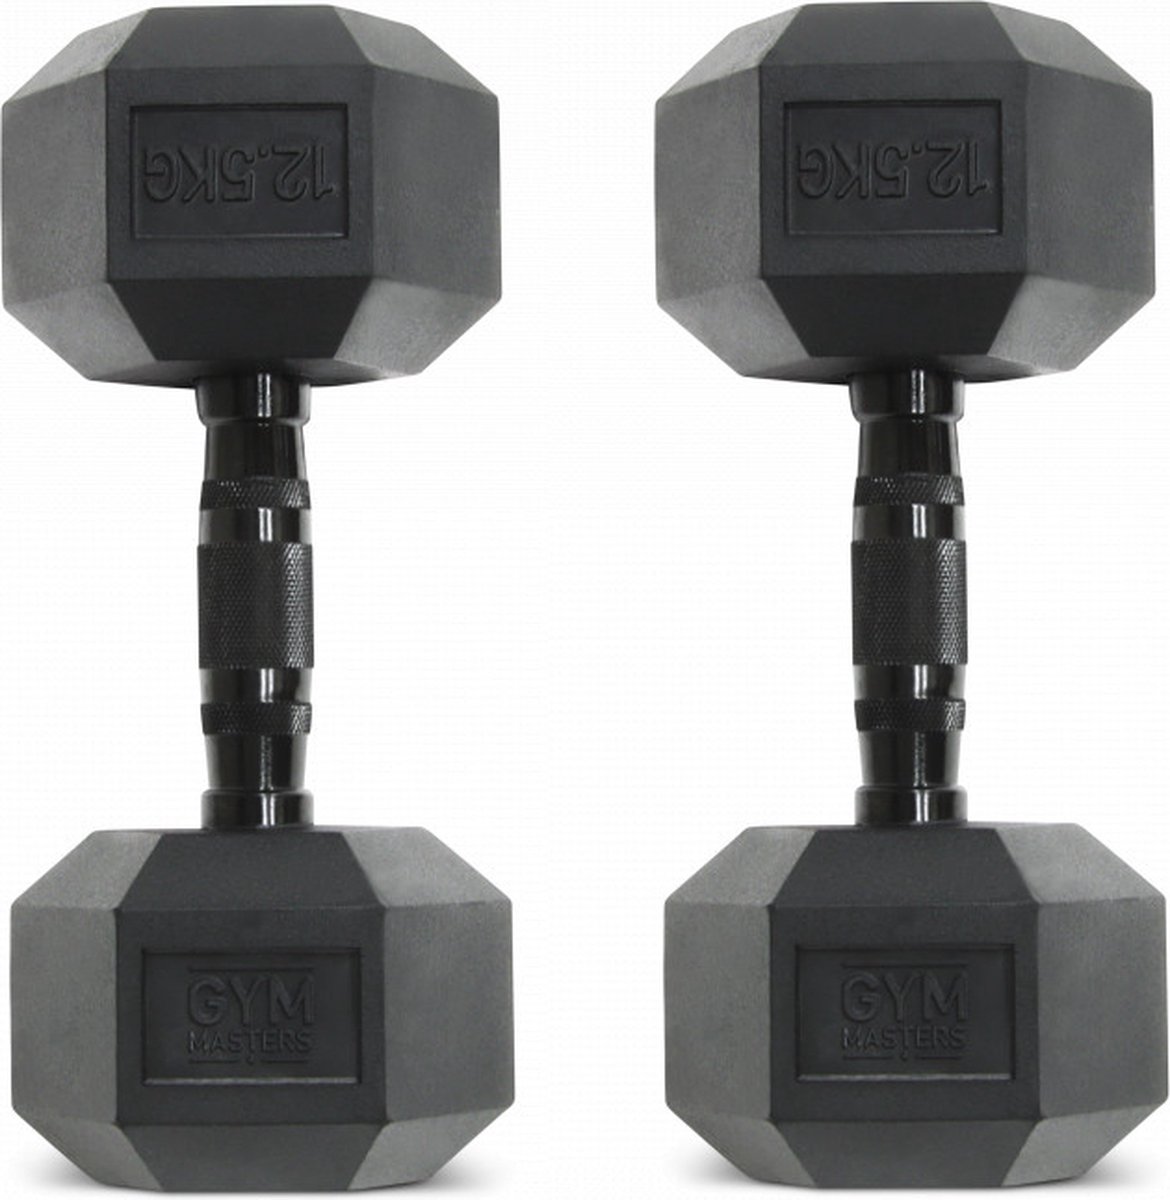 Gym Masters | Set (2 stuks) 12,5 kg - Zwarte Hexagon dumbbells zwart | hexa dumbell 2 X 12,5 kg | hexa dumbells | Dumbells set | gewichten | halters